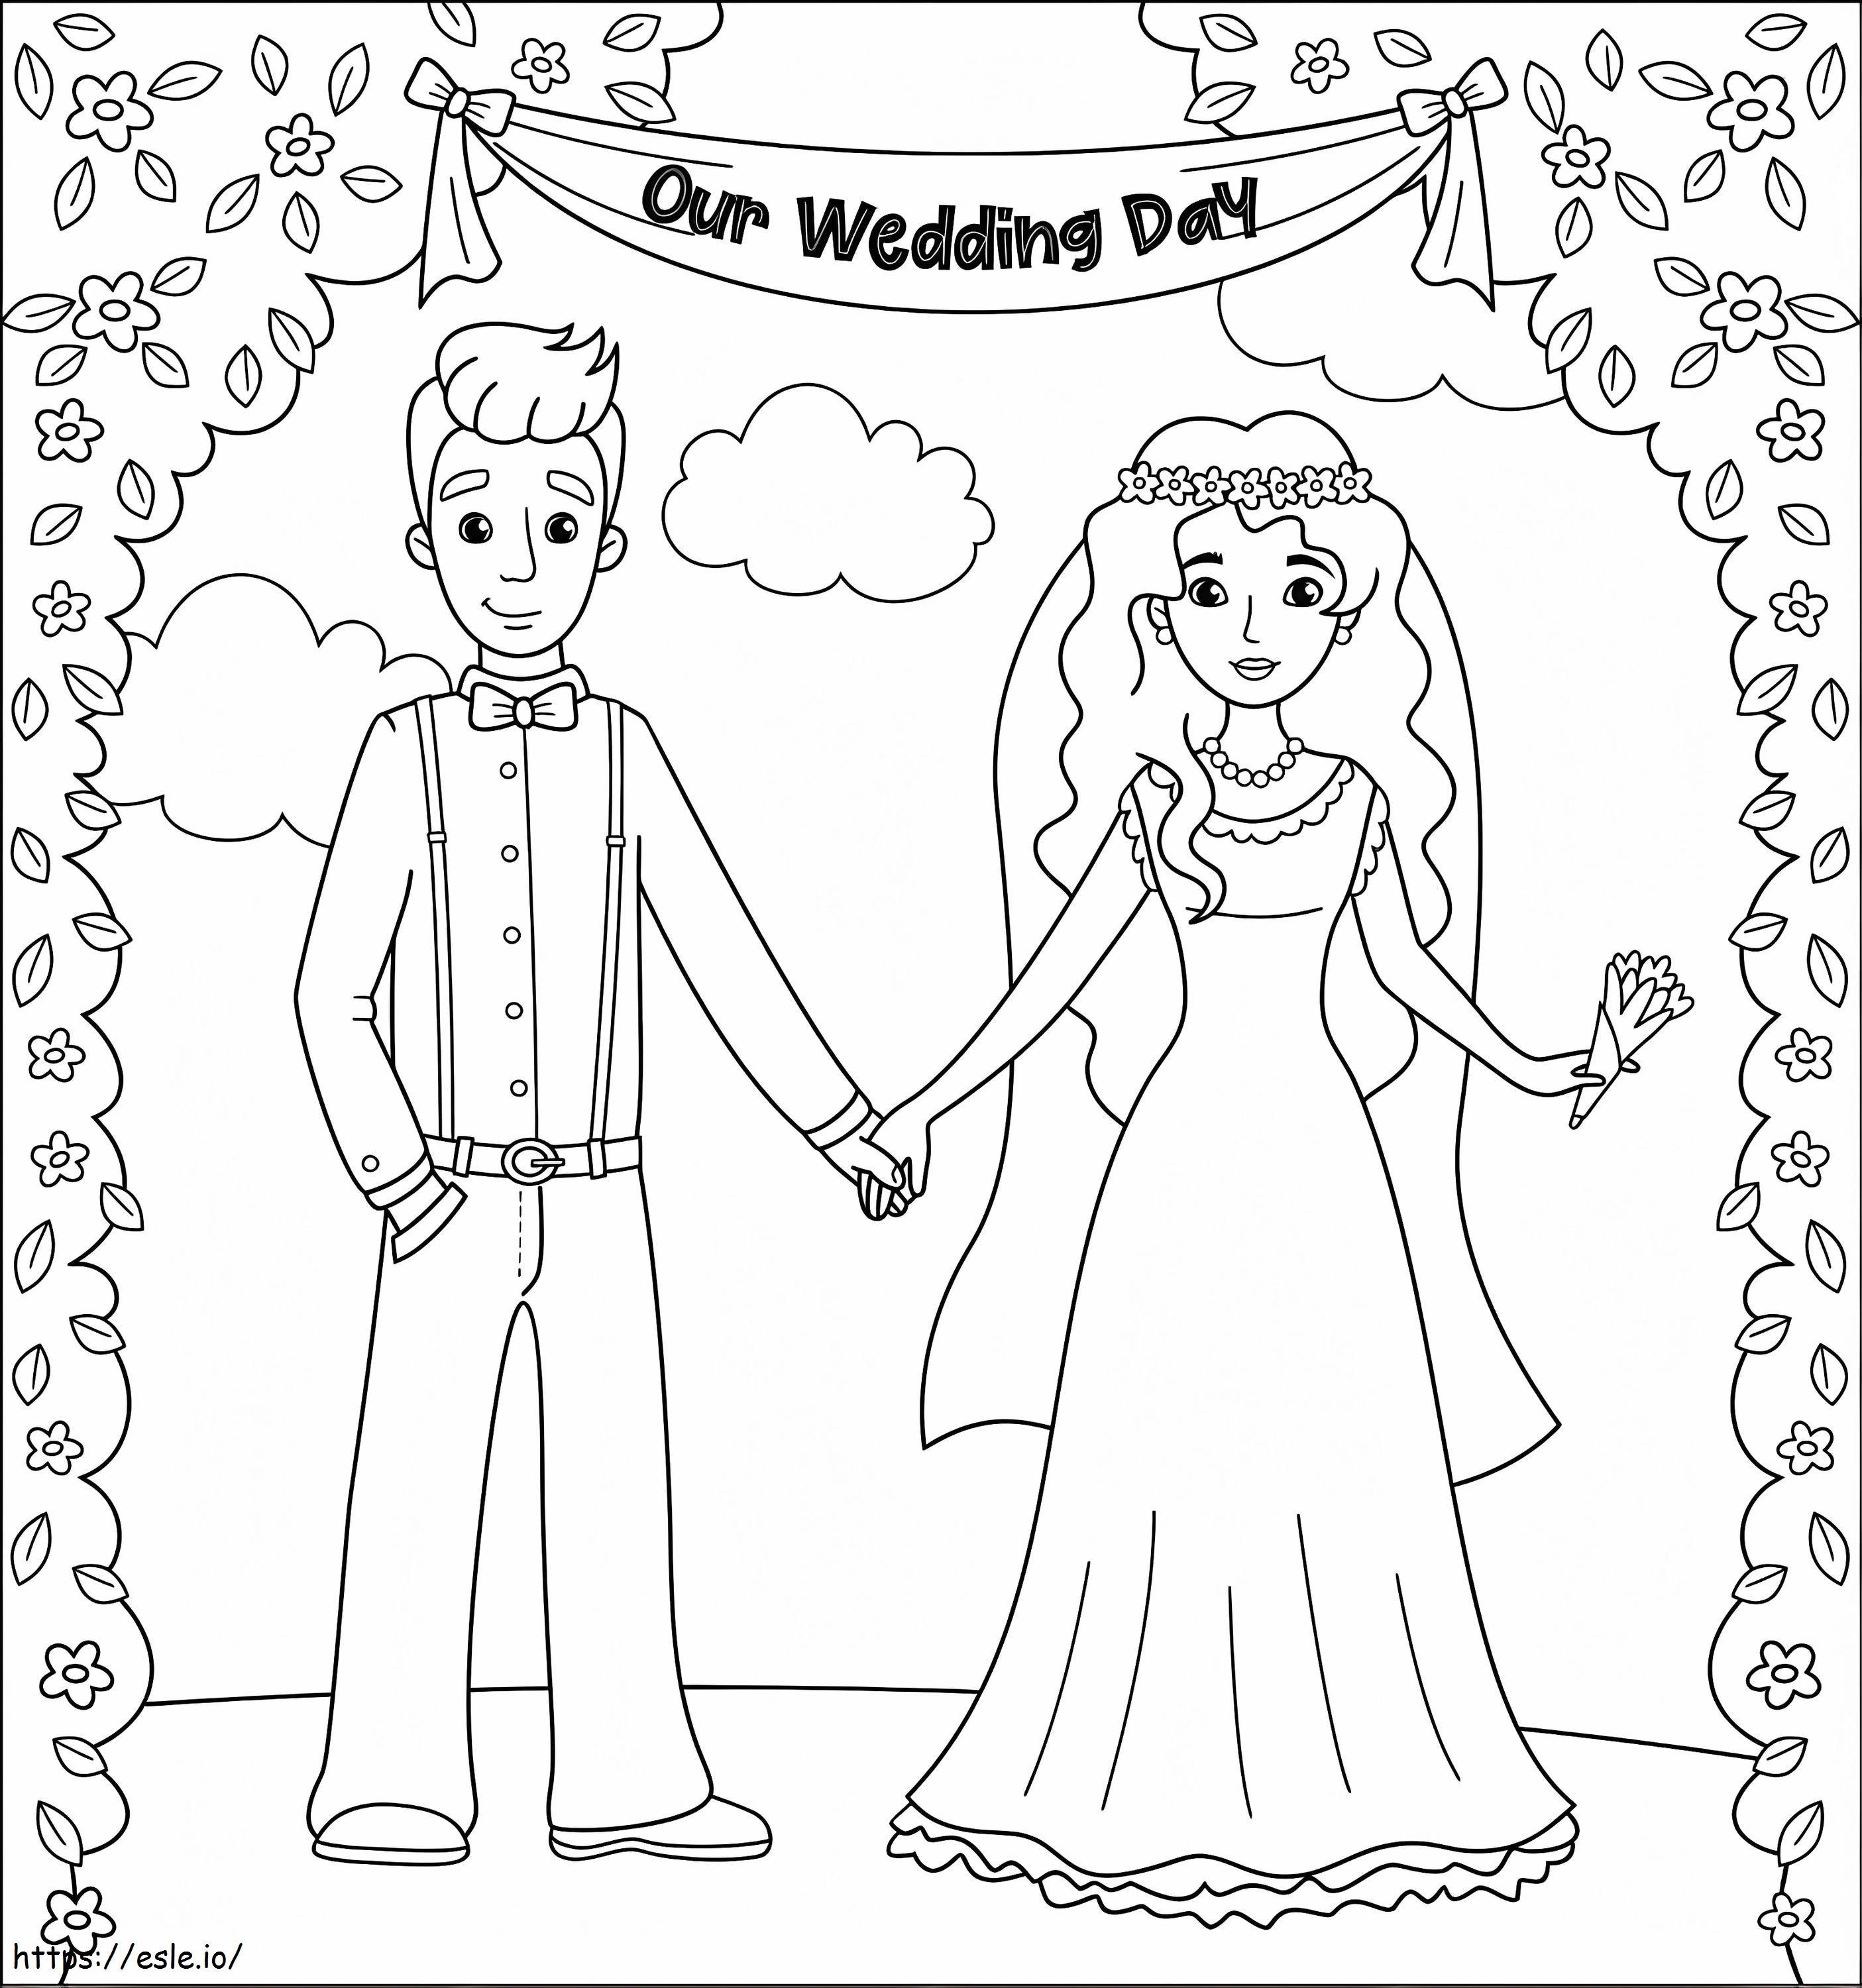 Rustic Wedding coloring page